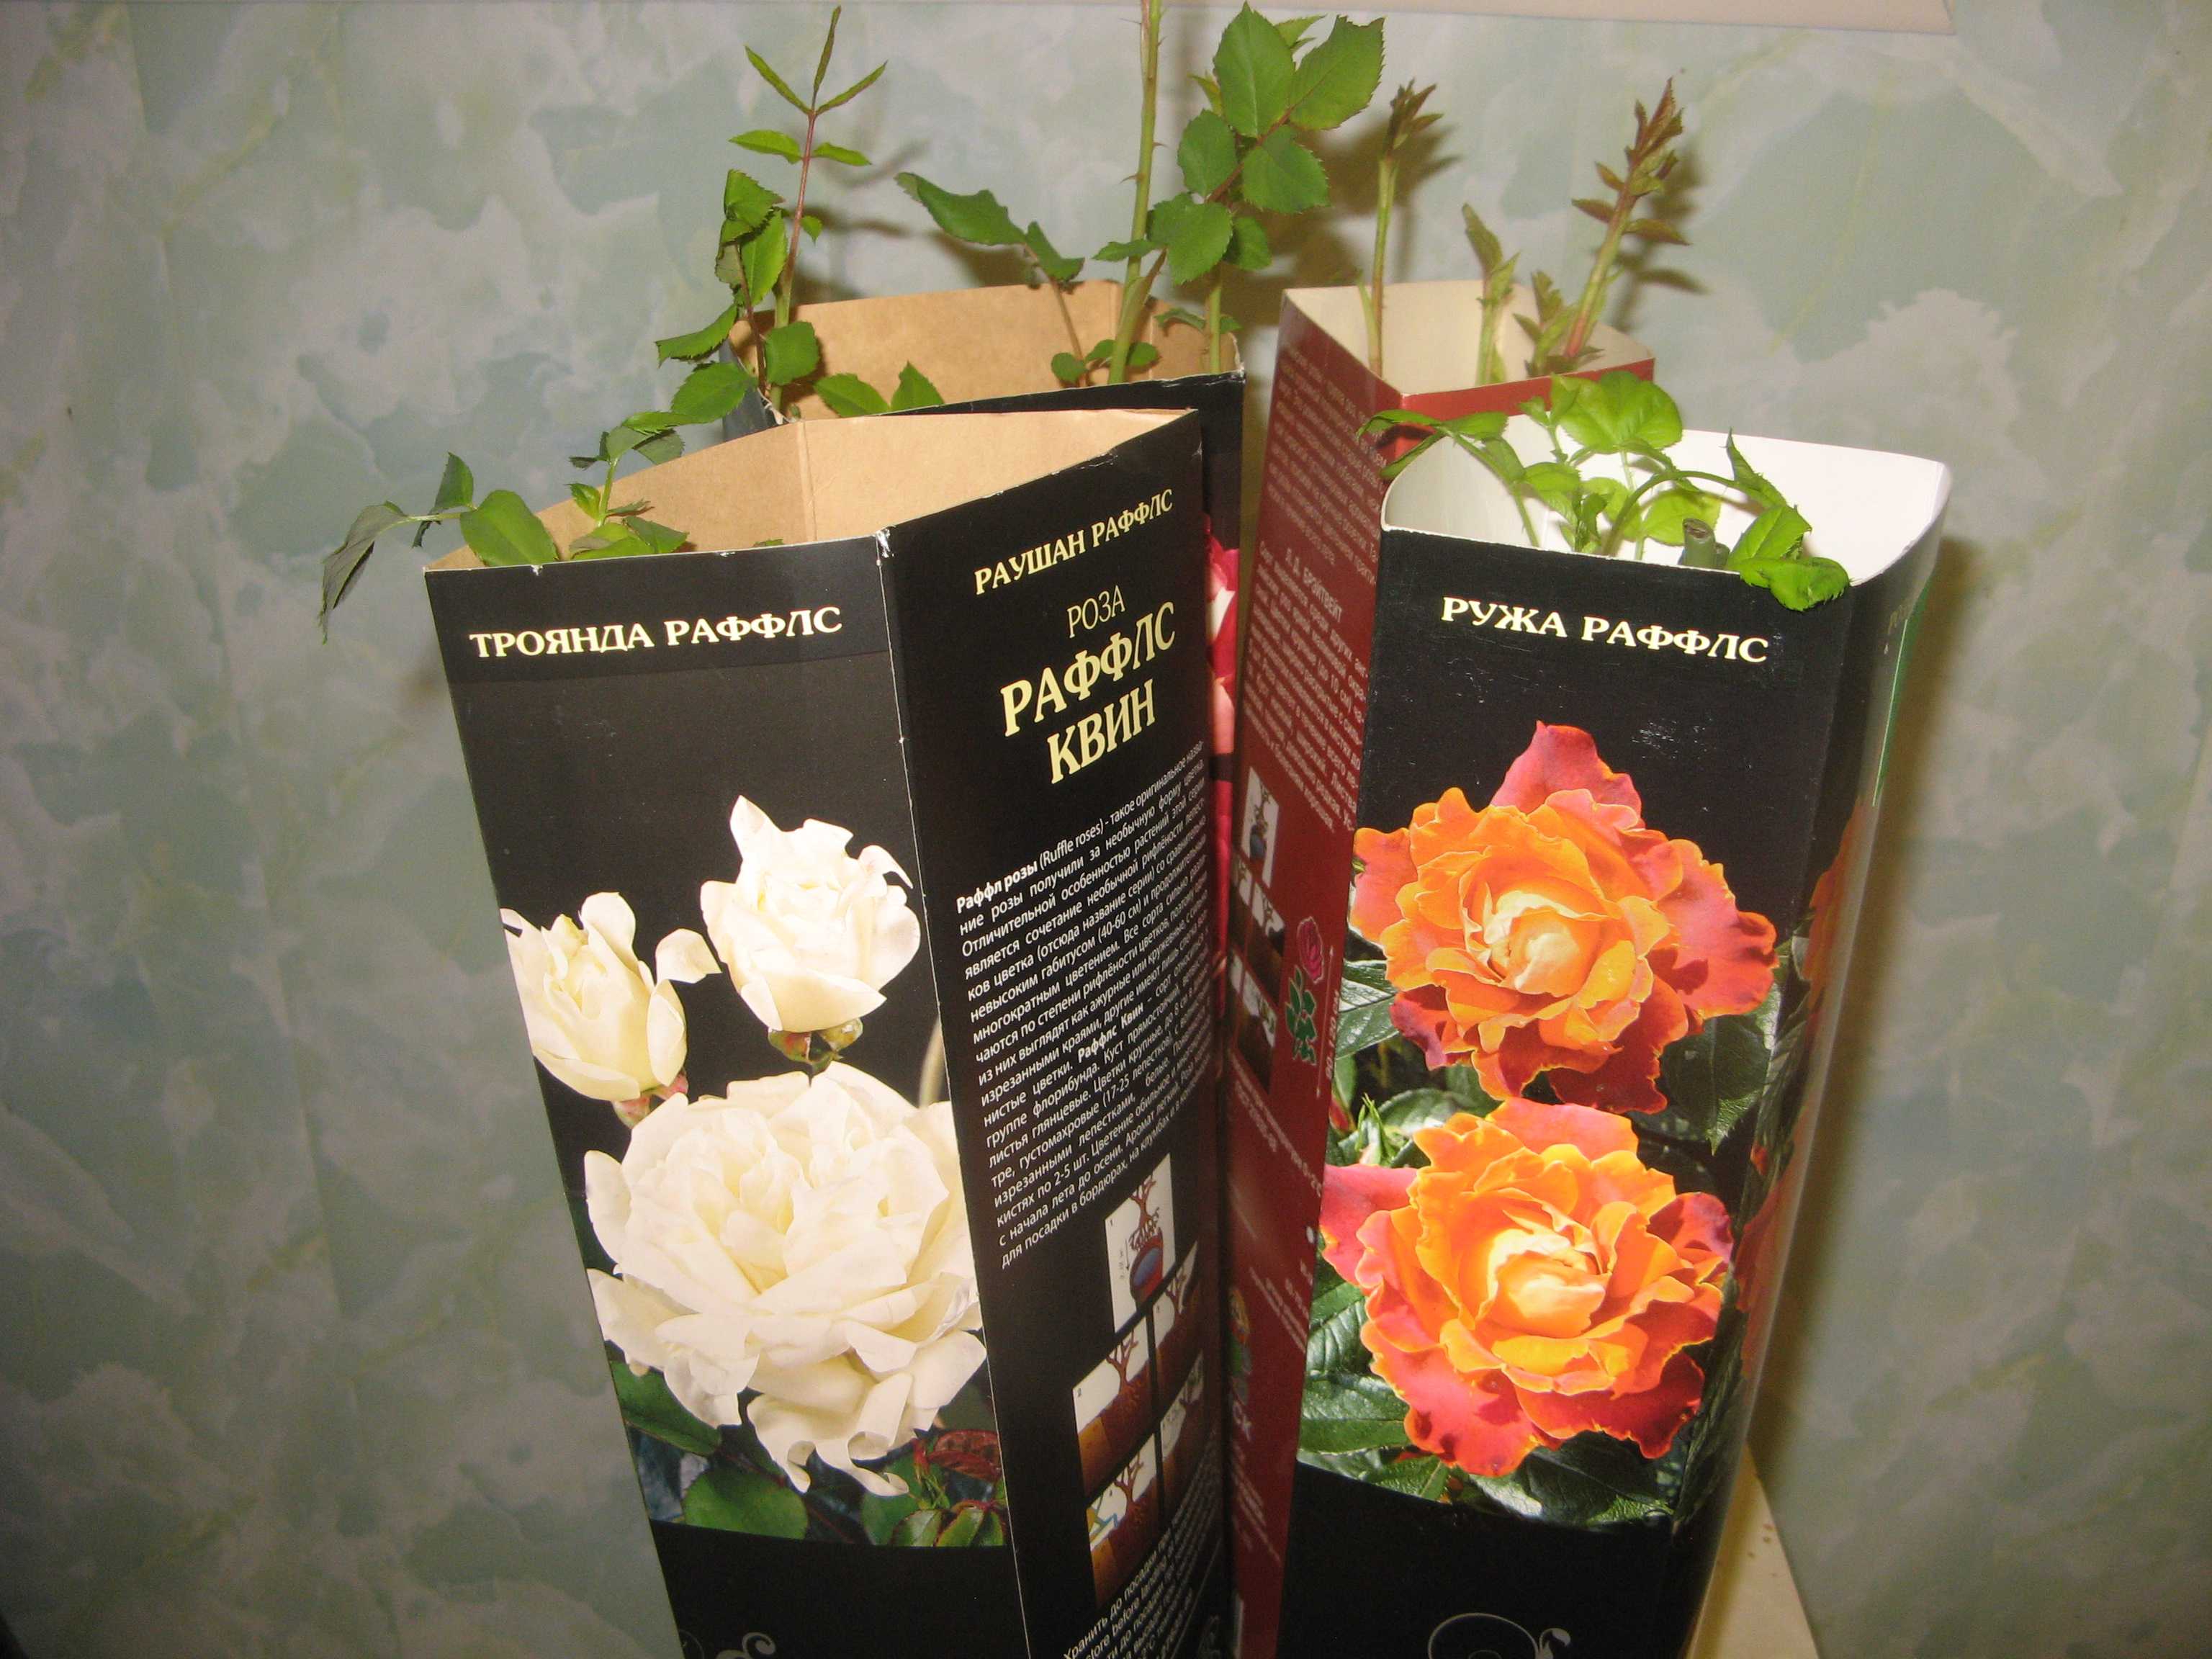 Розы покупка саженцев. Саженцы роз в коробке. Упаковка для саженцев роз. Саженцы роз в упаковке. Розы саженцы из коробки.